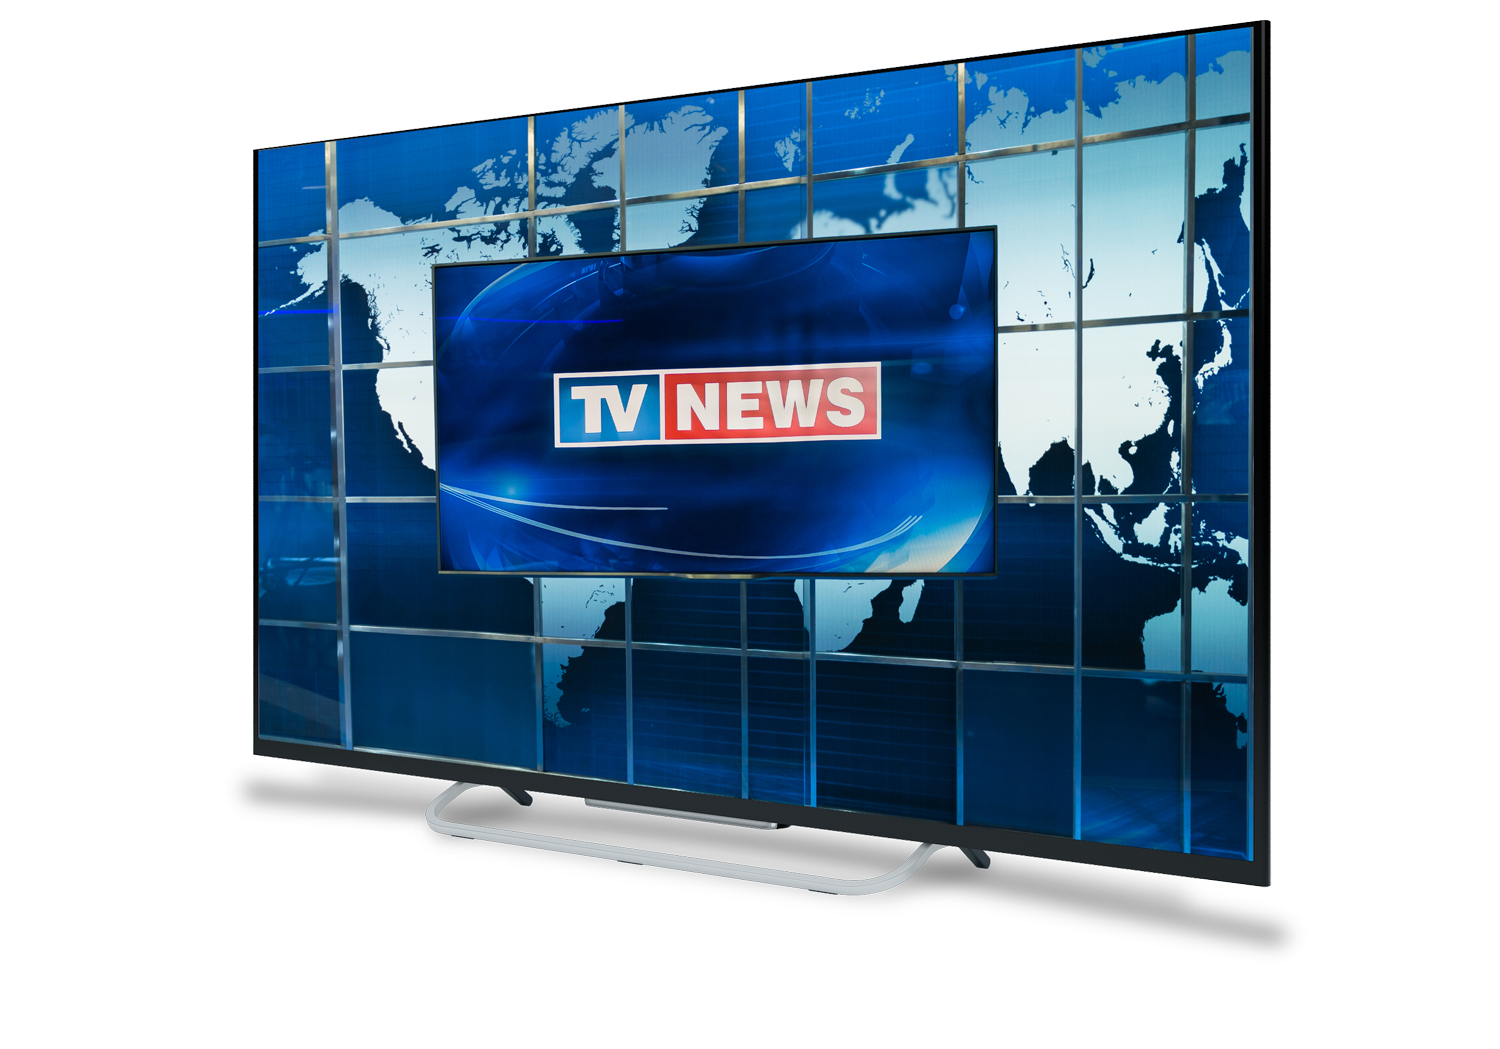 TV screen showing TV News